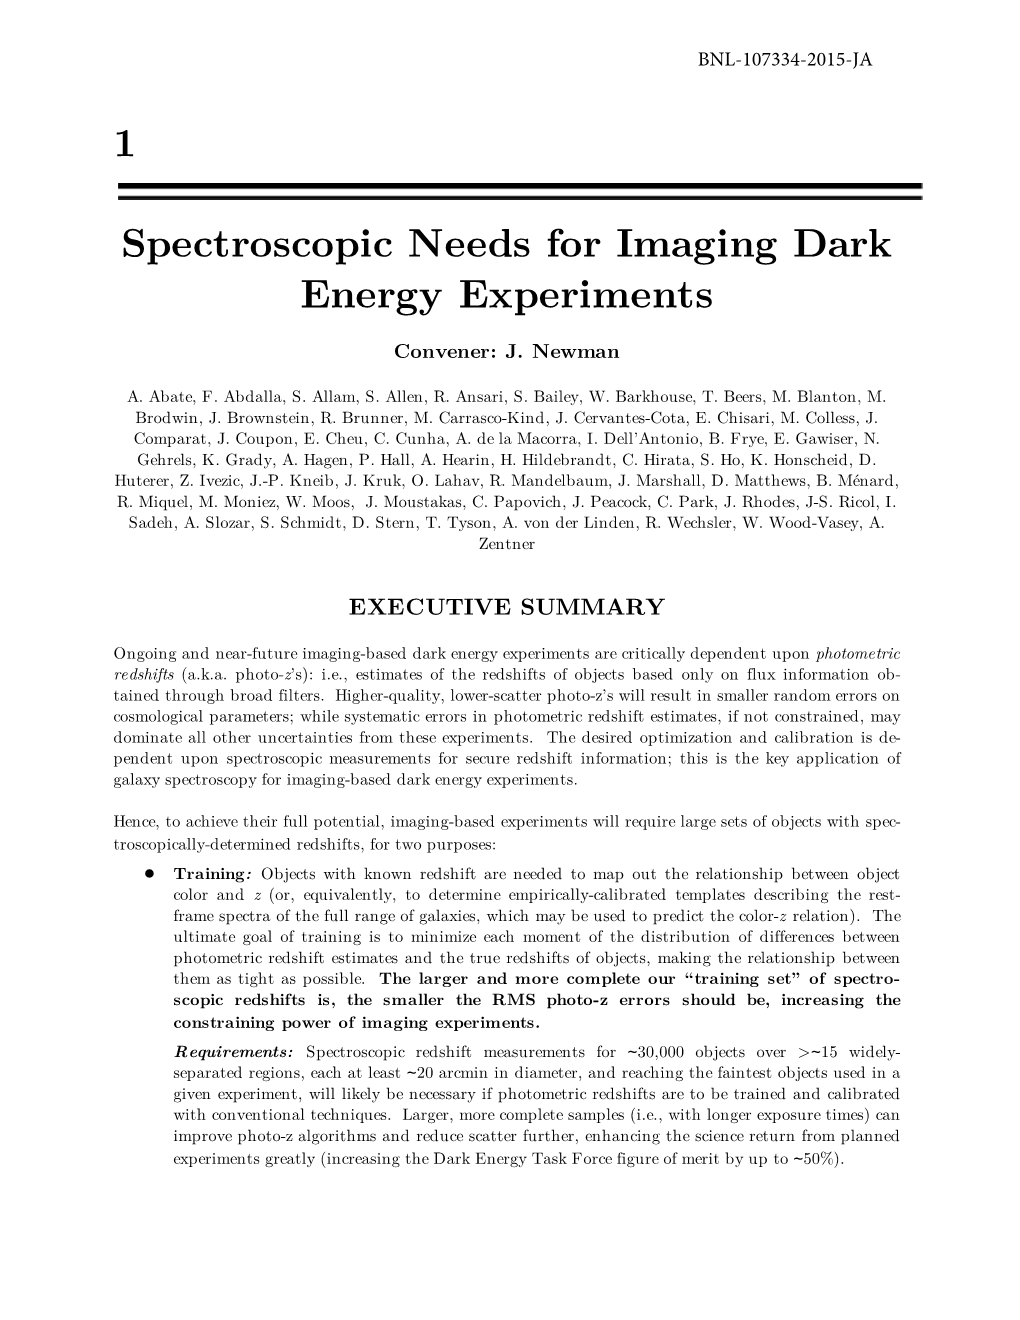 1 Spectroscopic Needs for Imaging Dark Energy Experiments